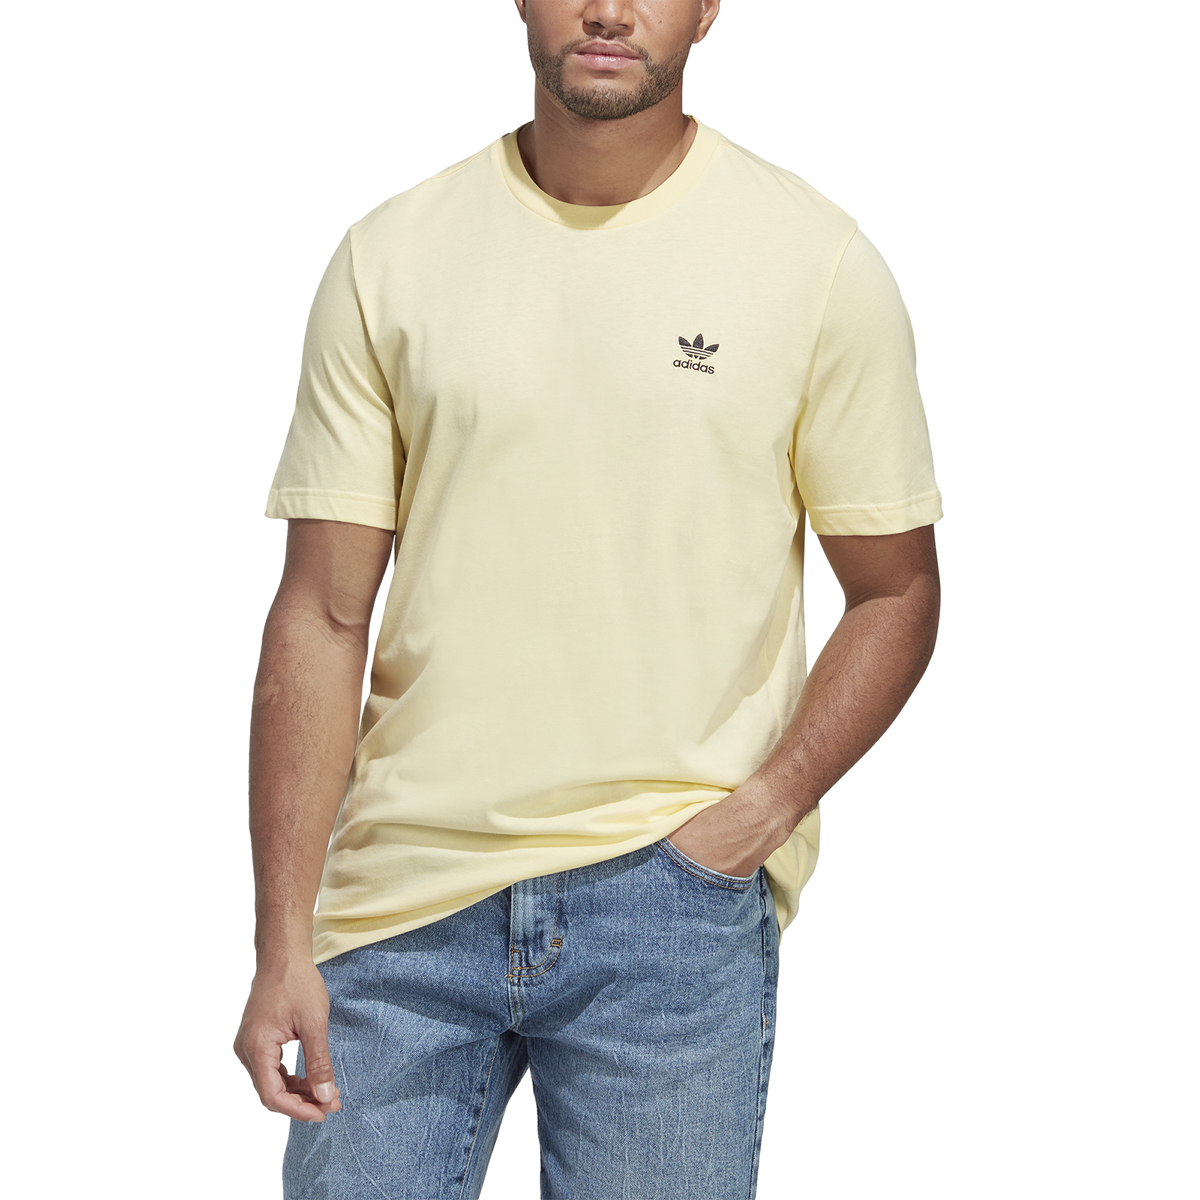 adidas-Originals-Trefoil-T-Shirt-Yellow